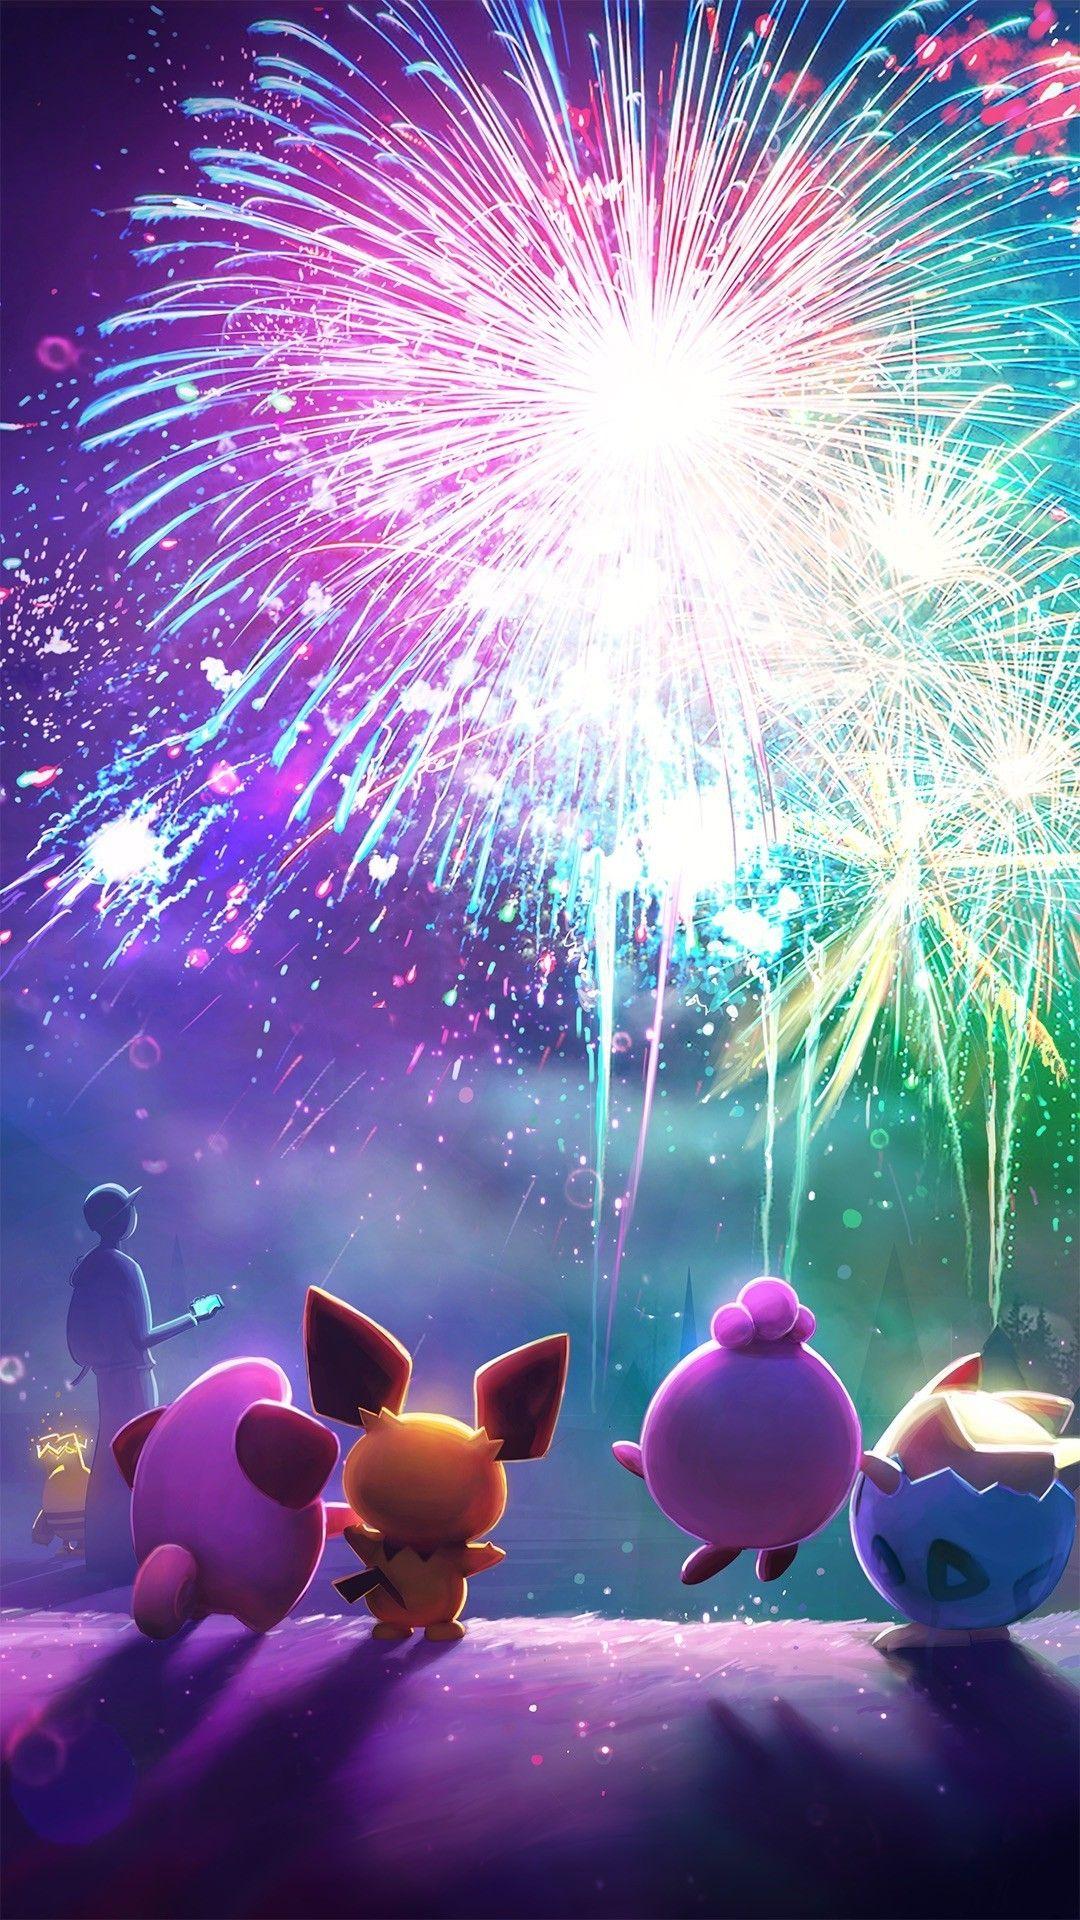 Official Pokémon Go wallpaper for 2020